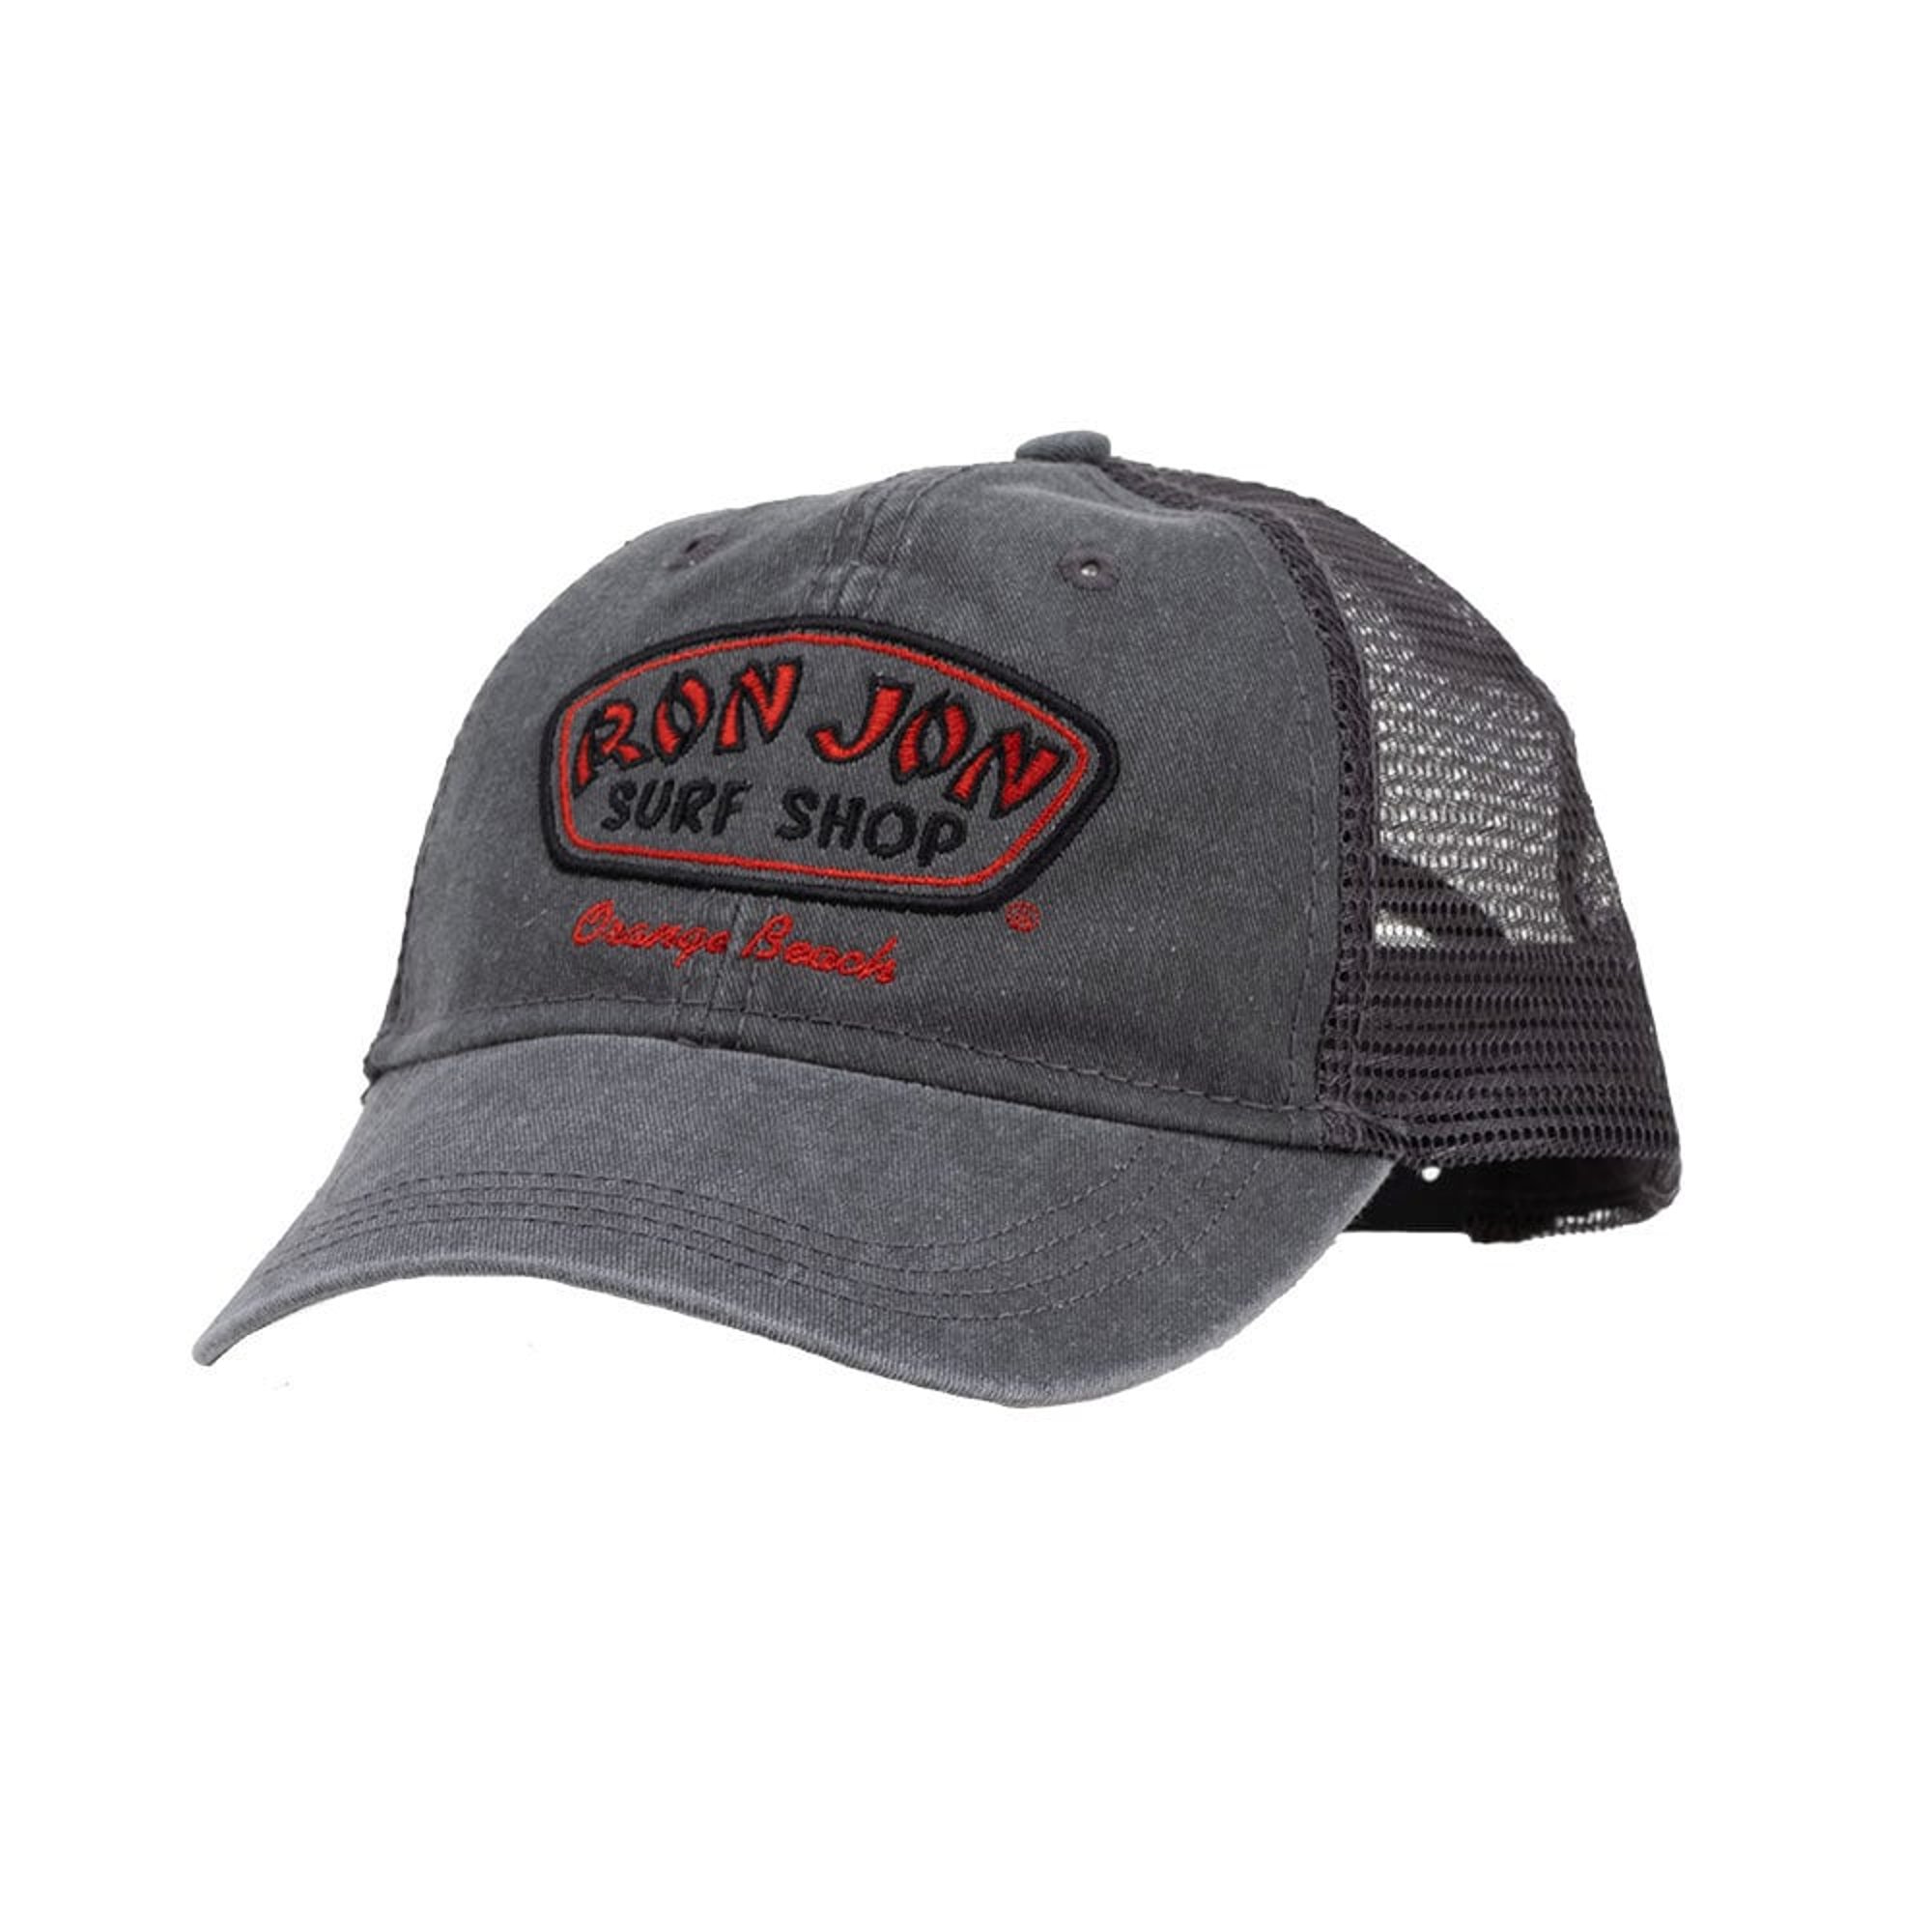 LPG Apparel Co. Retro Marlin Sunset Snapback Flat Brim Trucker Hat – Lobo  Lures